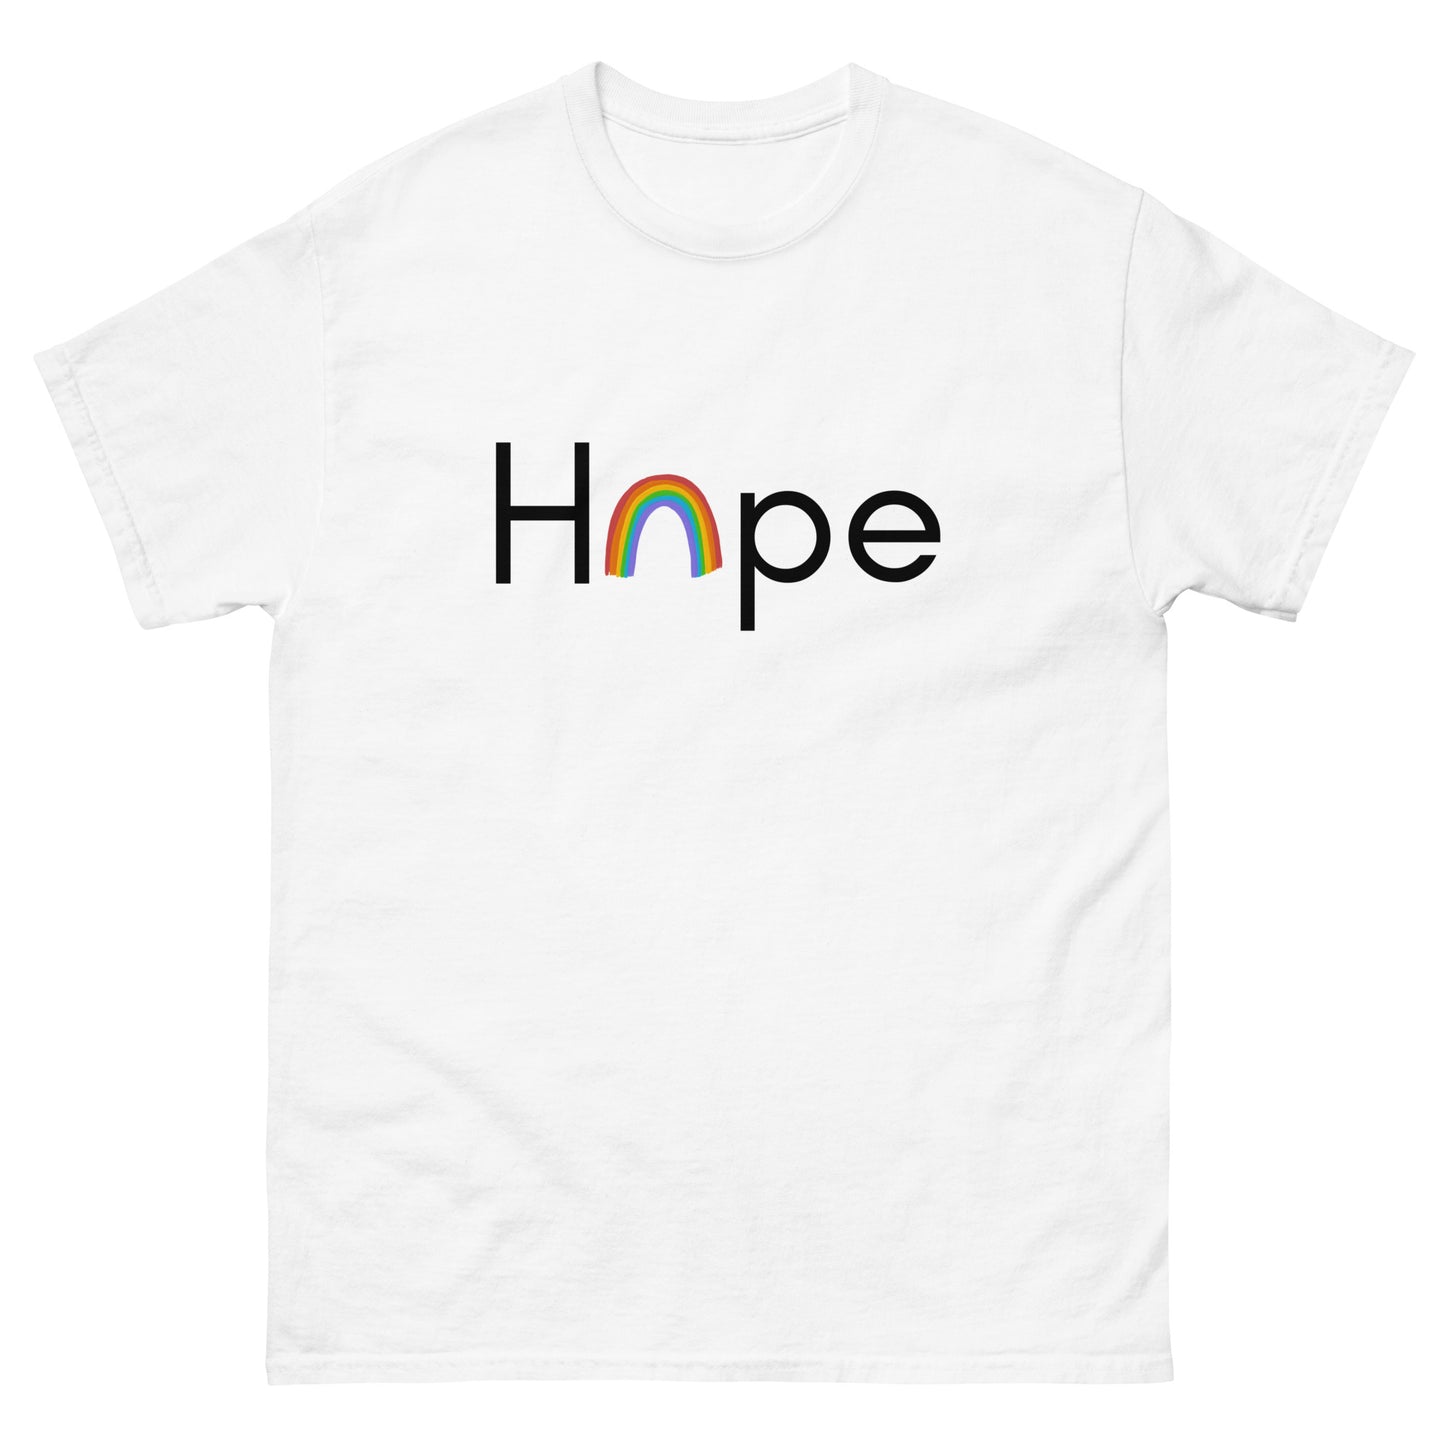 Hope T-Shirt - The Good Life Vibe